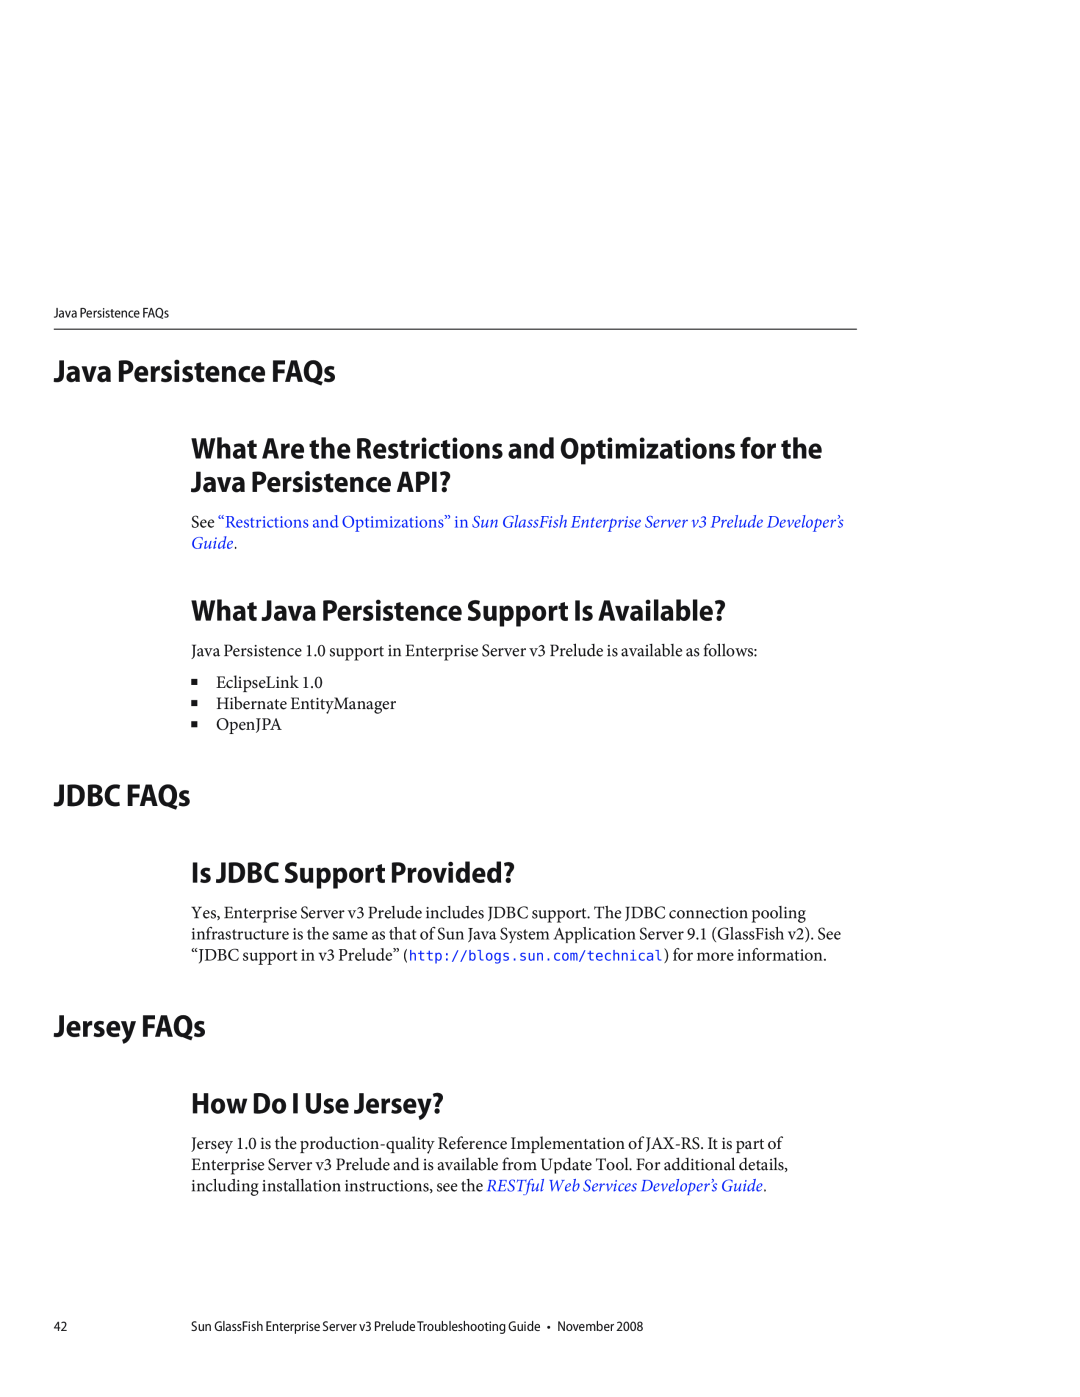 Sun Microsystems 820682310 Java Persistence FAQs, JDBC FAQs, Jersey FAQs, What Java Persistence Support Is Available? 